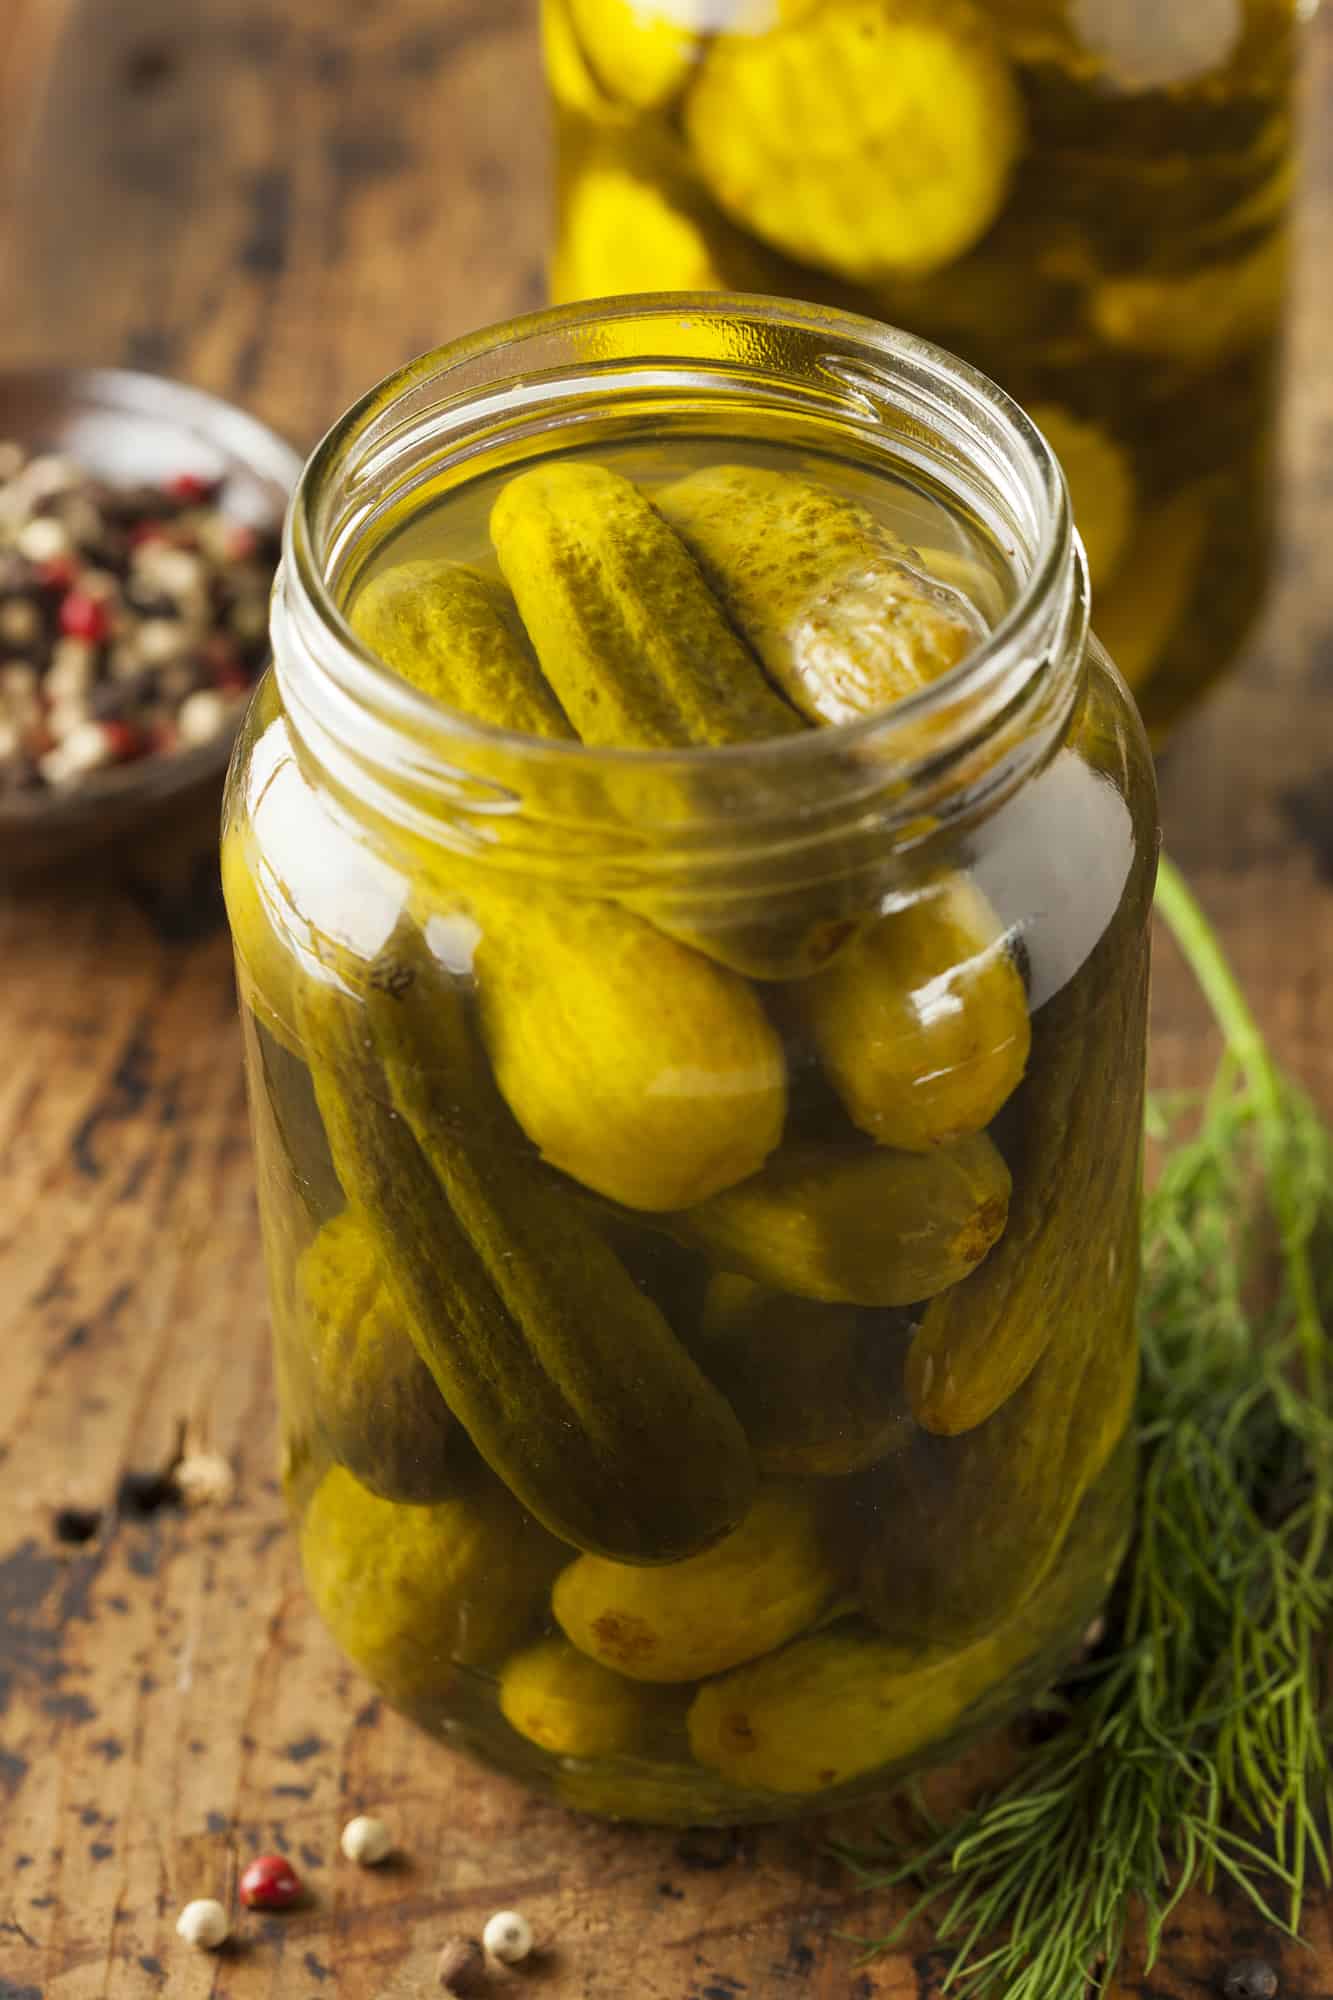 Homemade Organic Crunch Green Pickles in a Jar